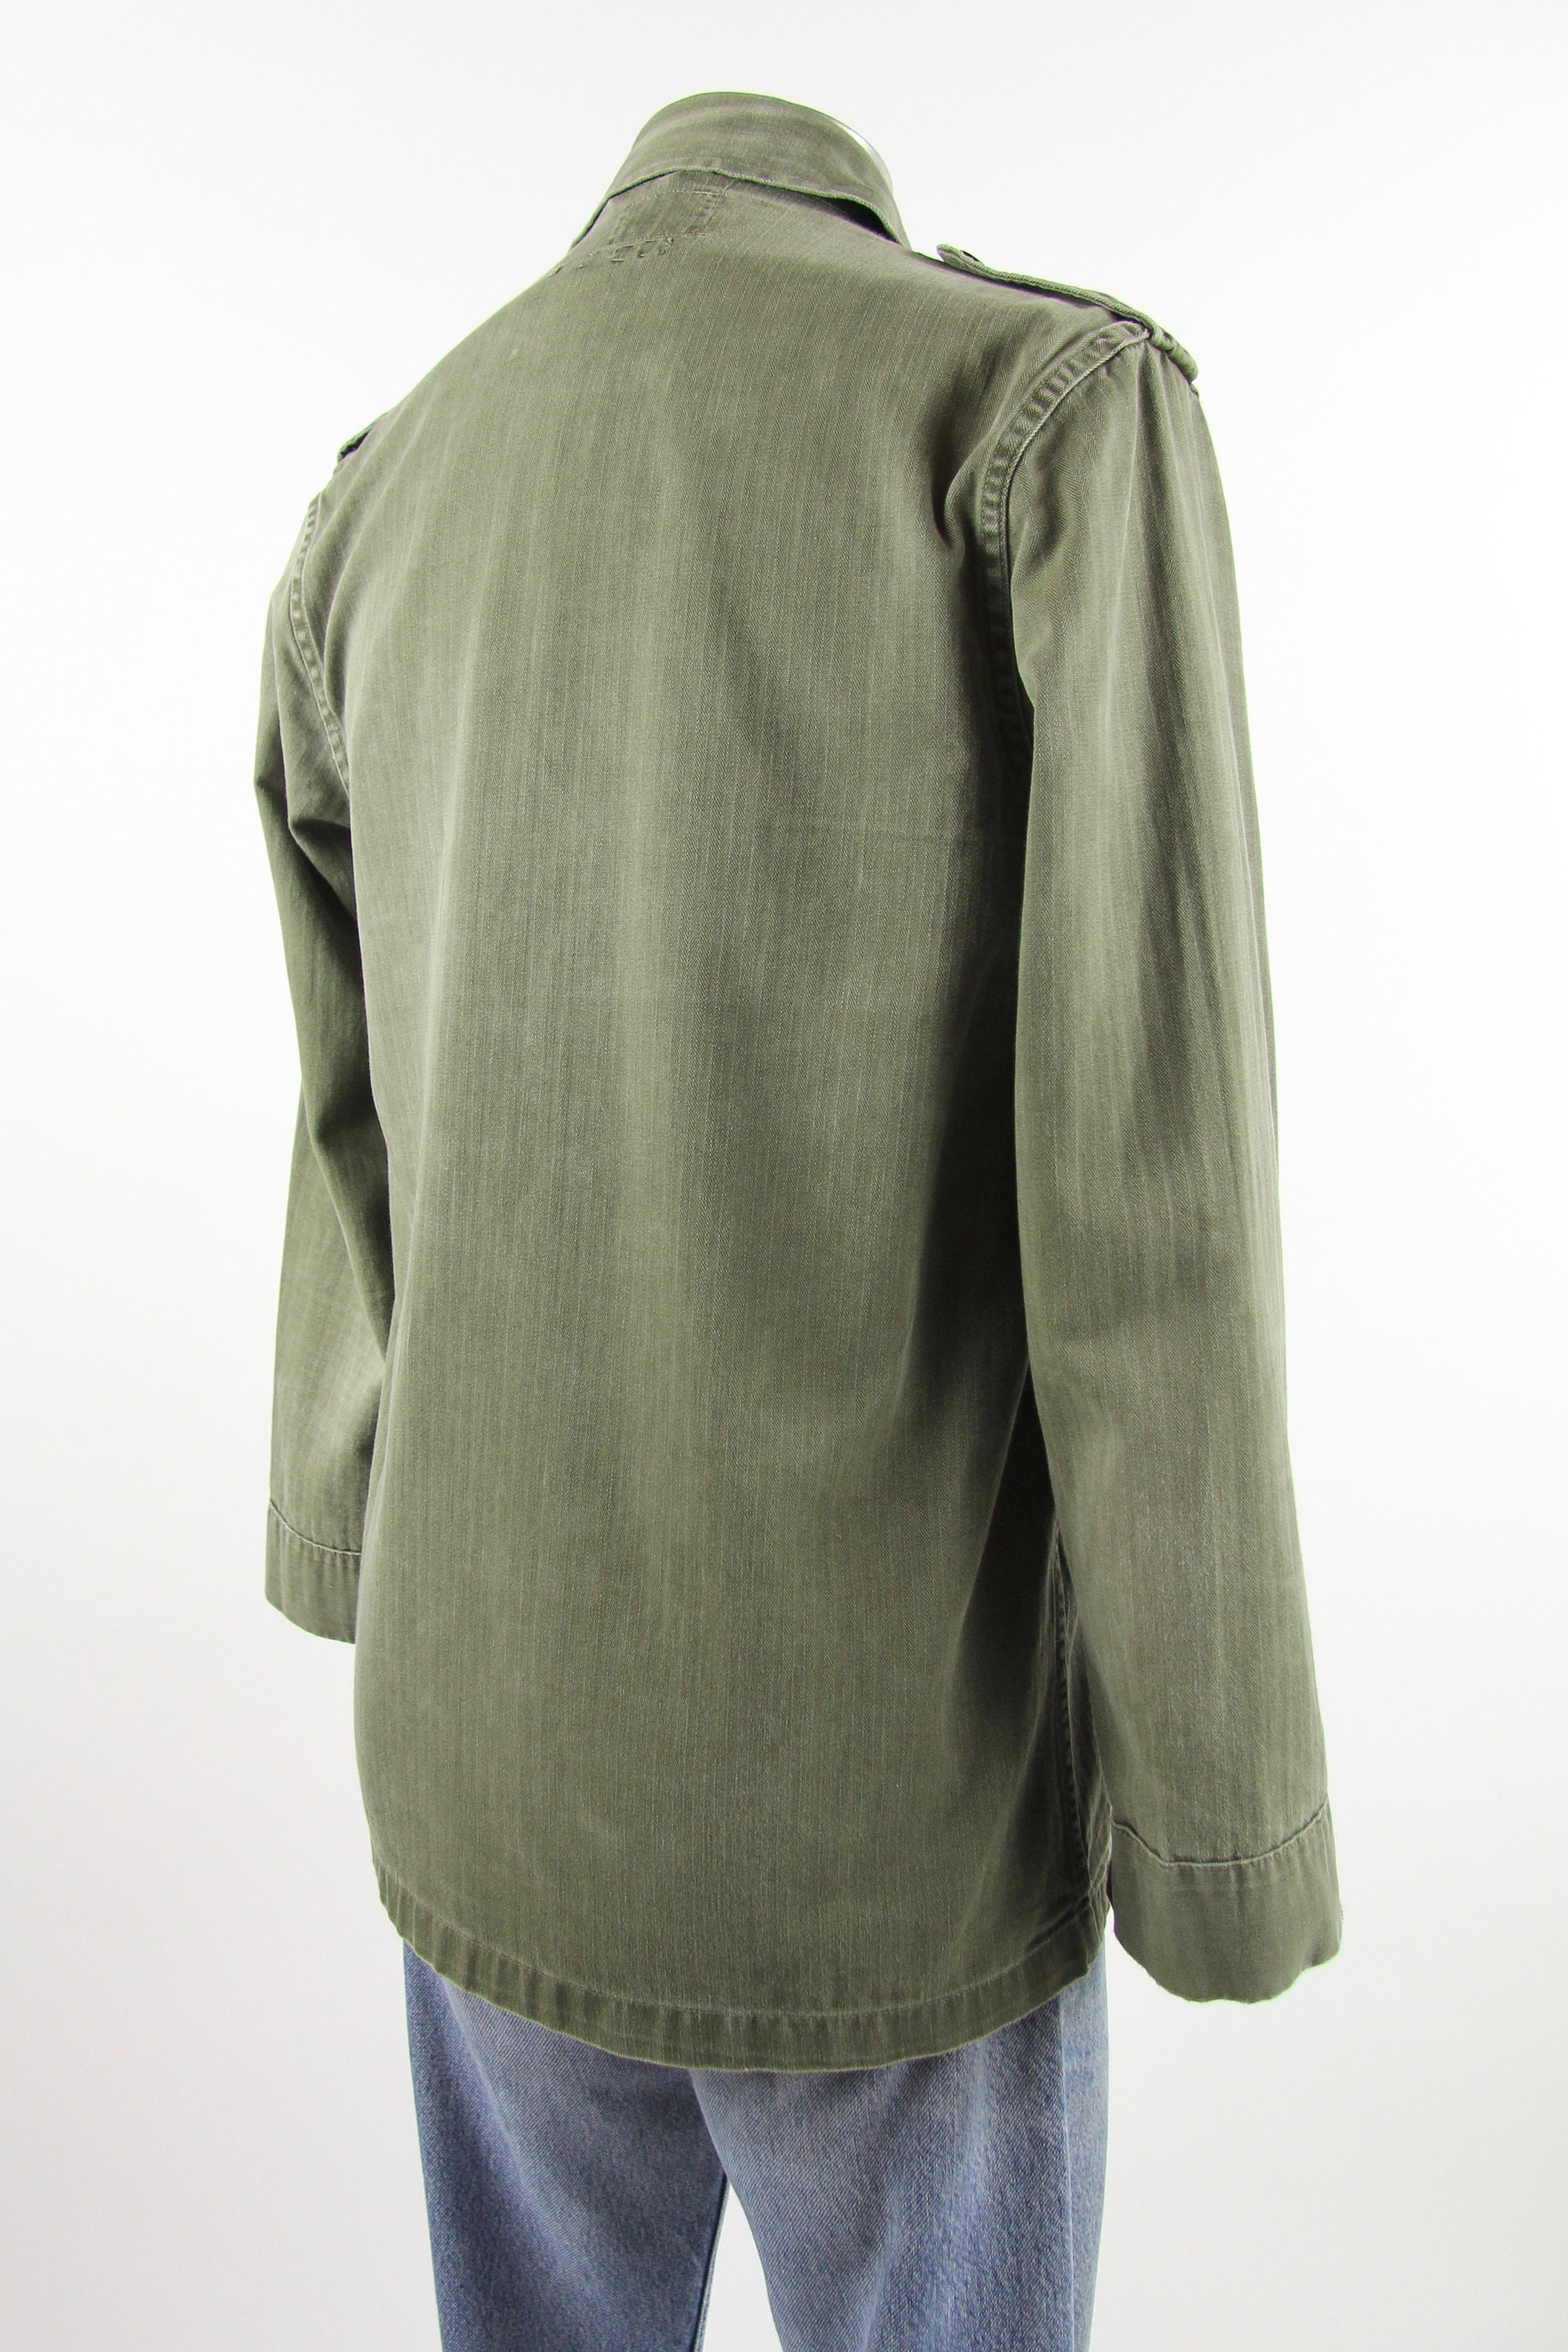 Green Military Shirt Men's Button Down Long Sleeve Olive Green Fatigue ...